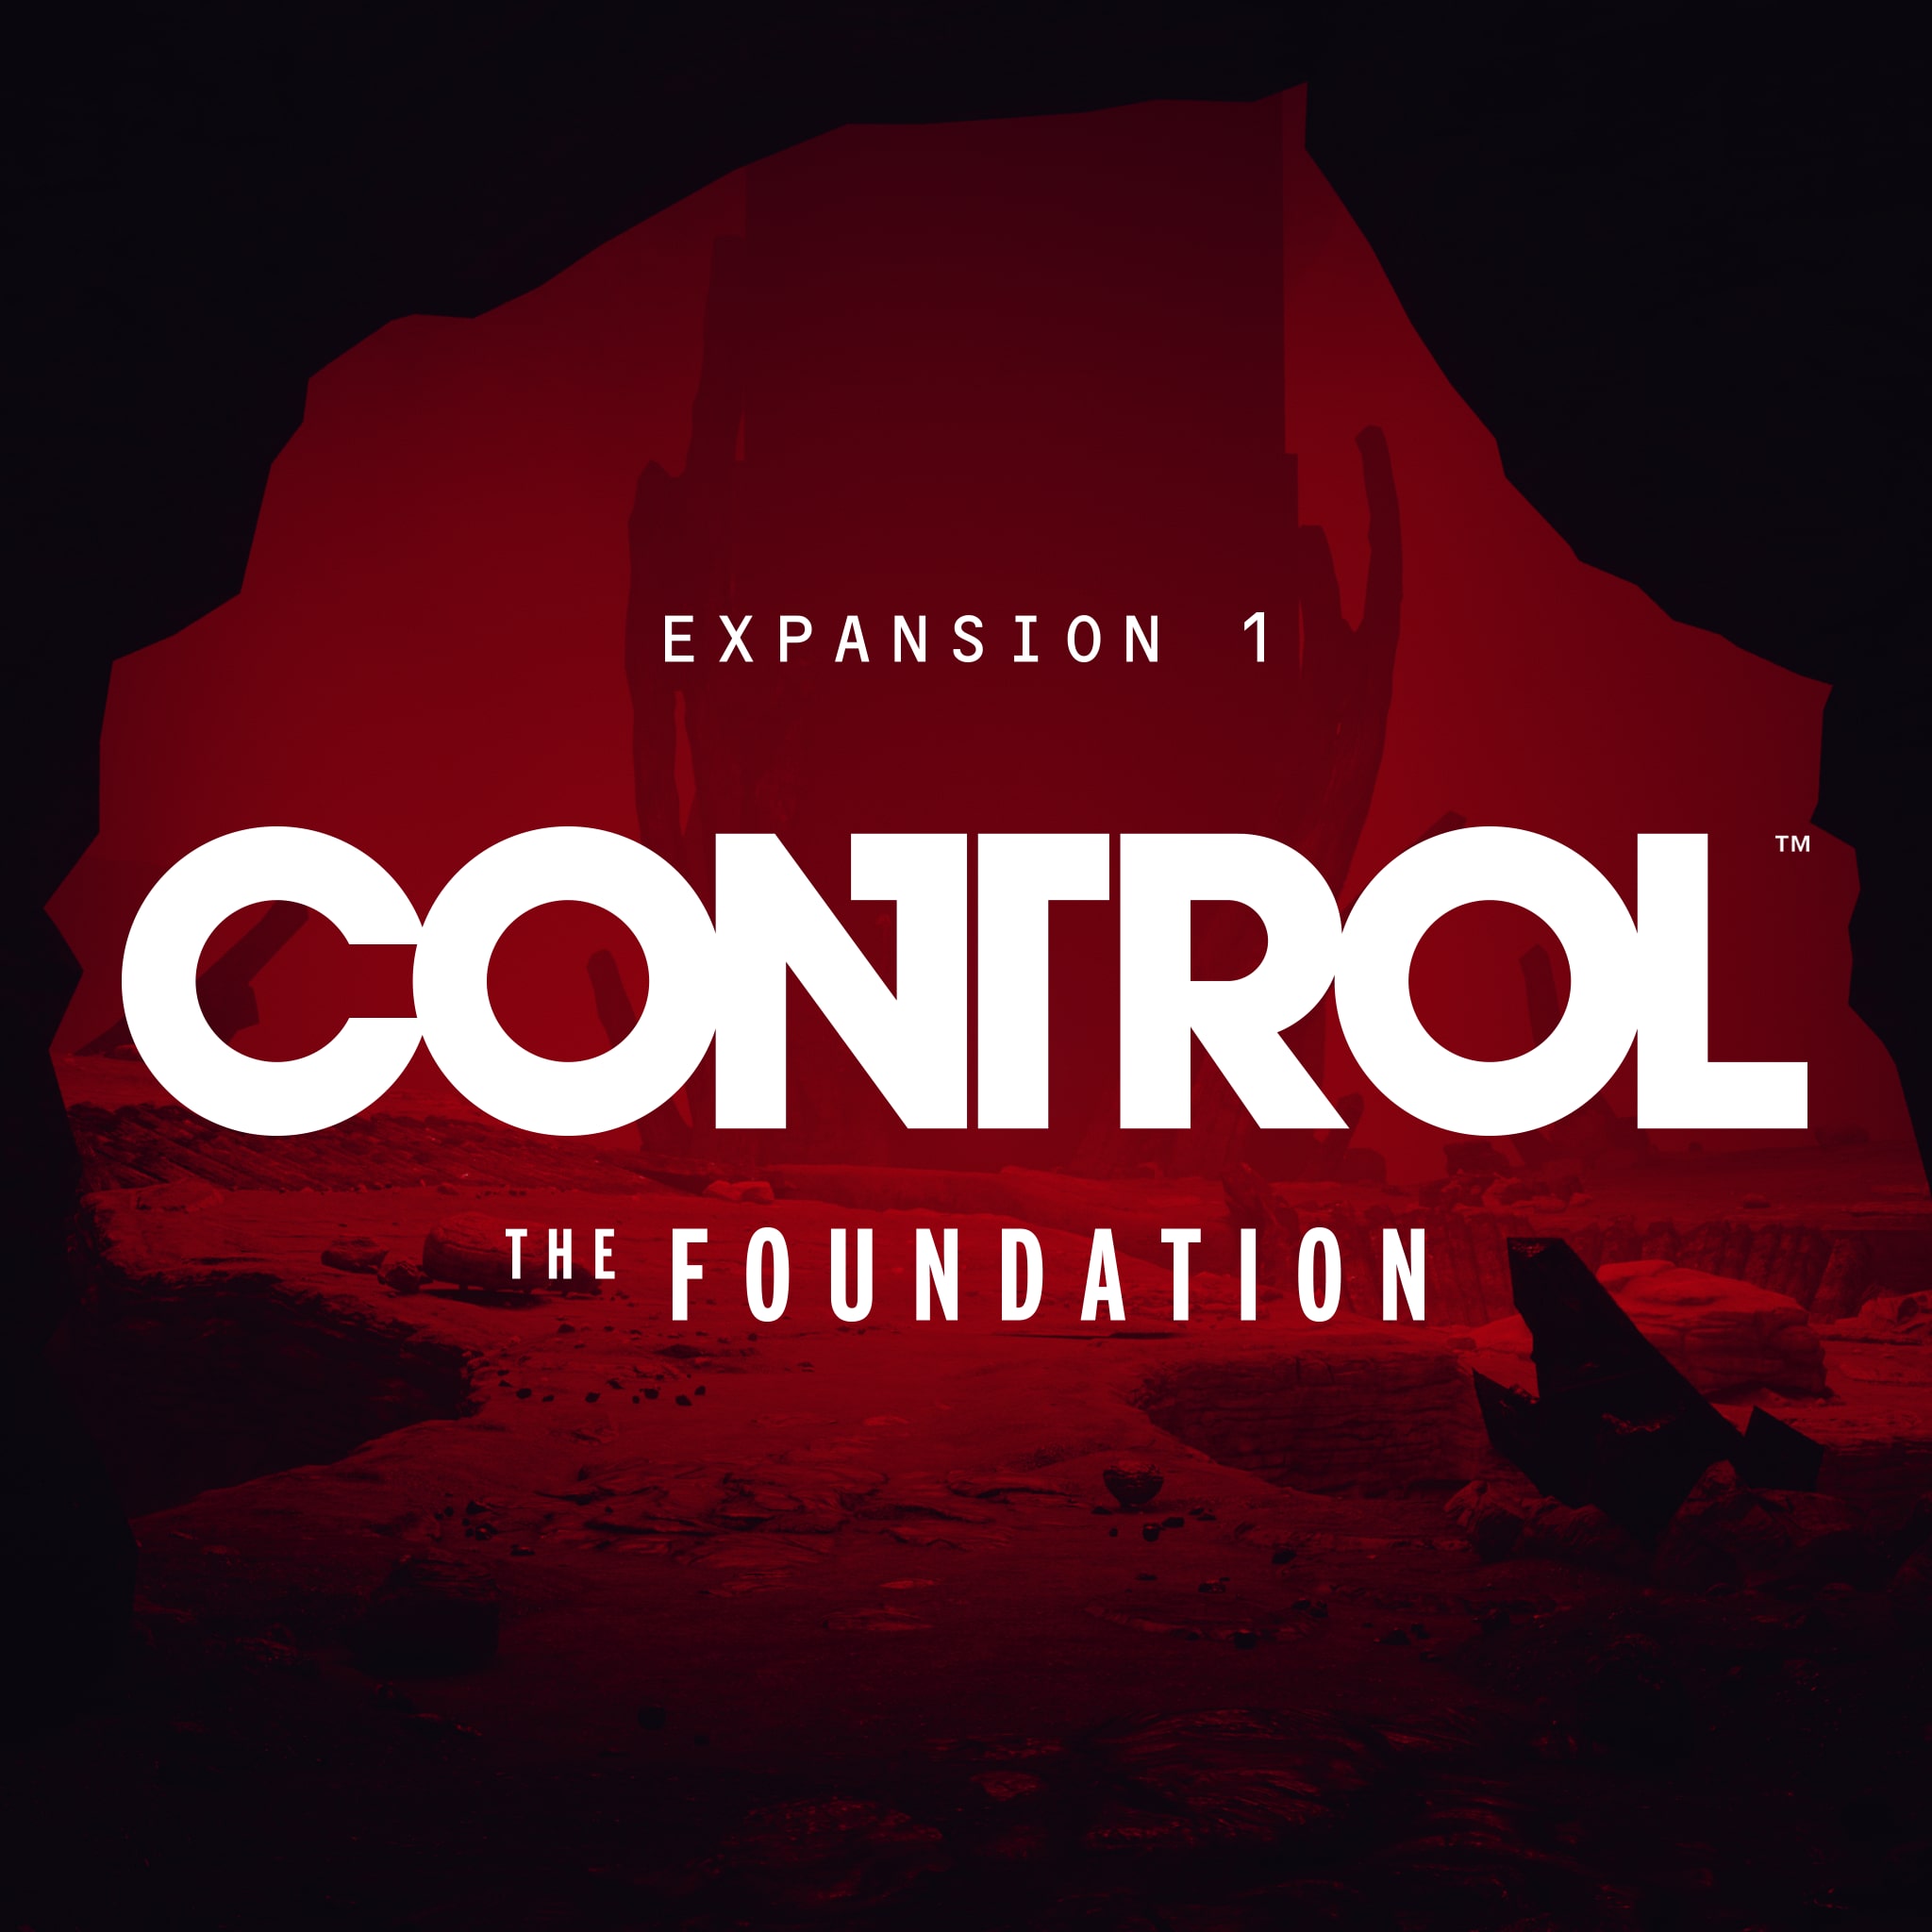 Paquete de expansión 1 de Control: ”The Foundation”